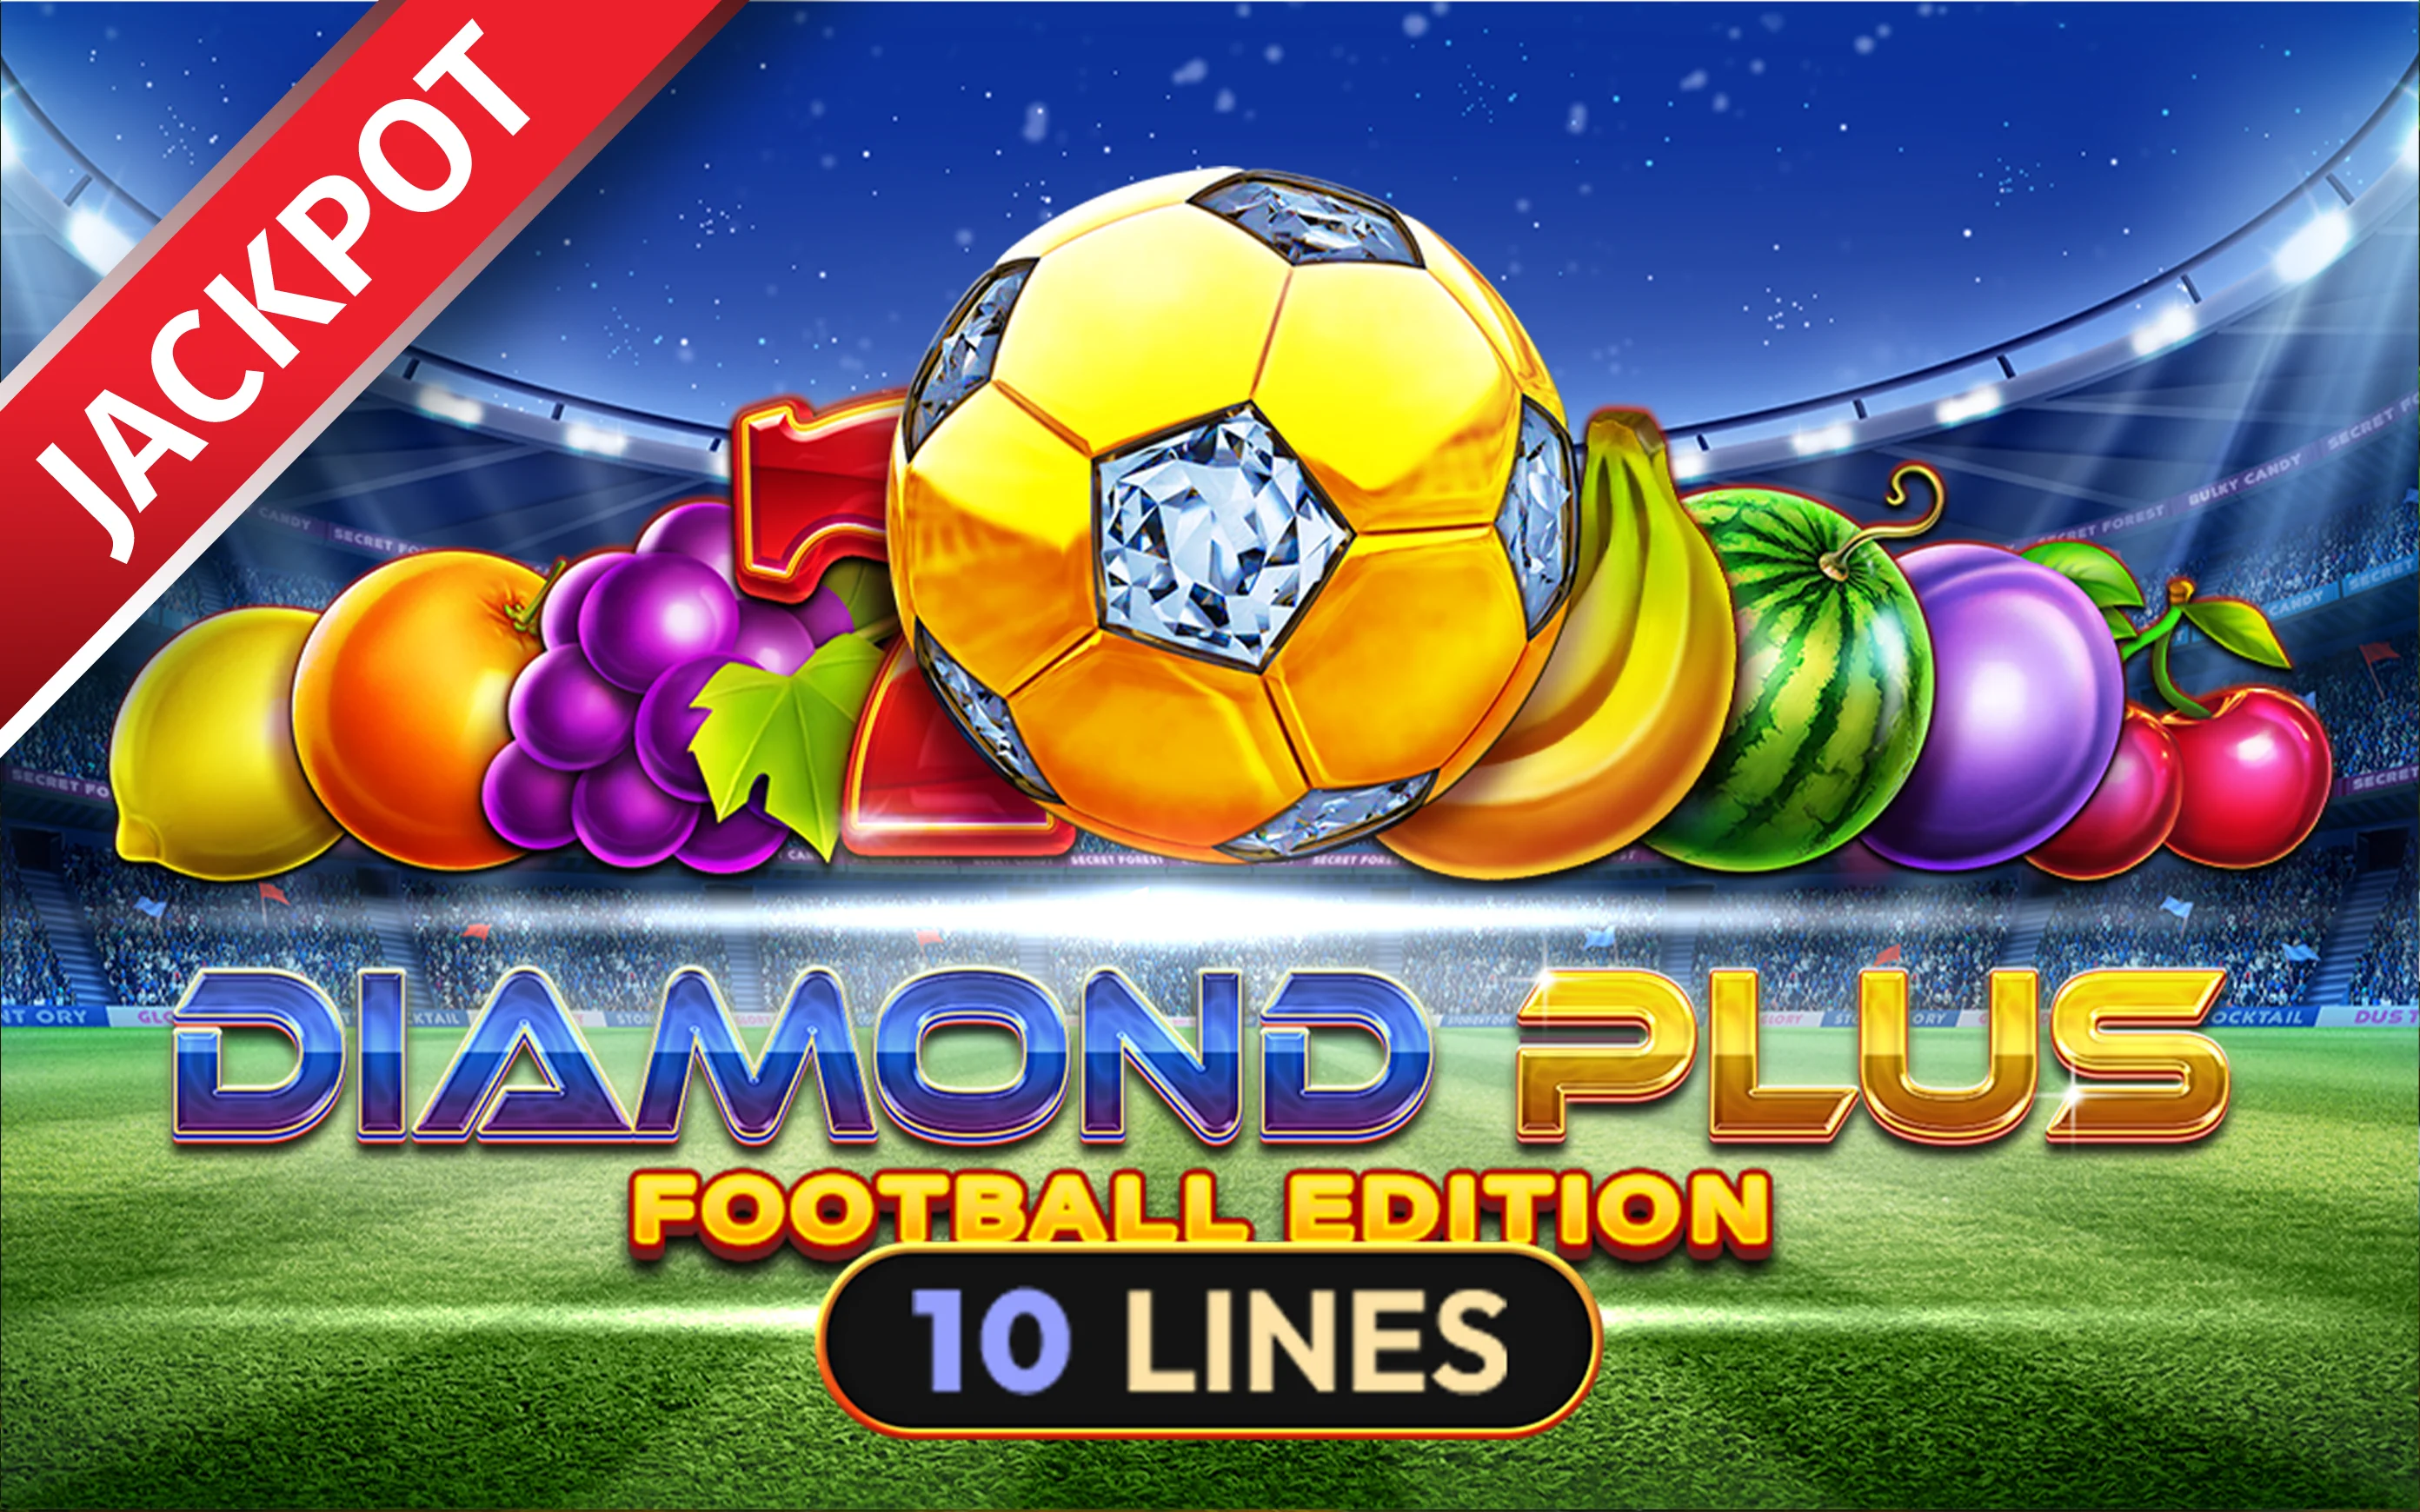 Spil Diamond Plus Football Edition på Starcasino.be online kasino
